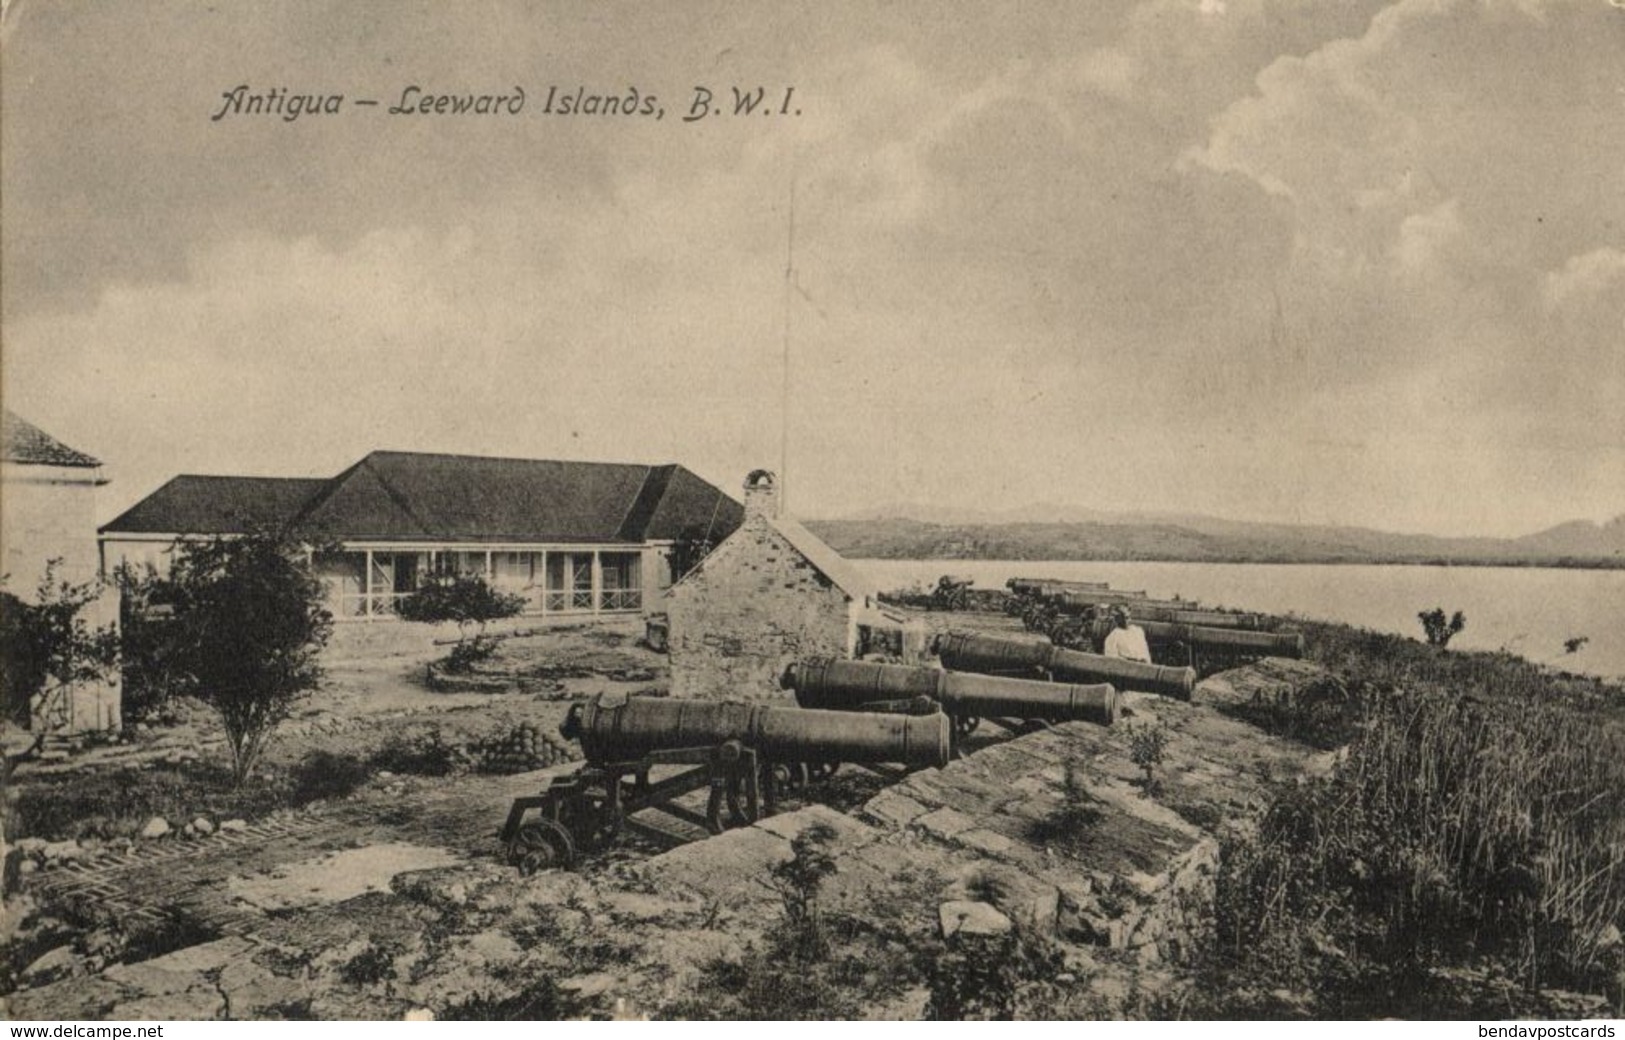 Leeward Islands, B.W.I., ANTIGUA, Partial View With Cannons (1910s) Postcard - Antigua & Barbuda